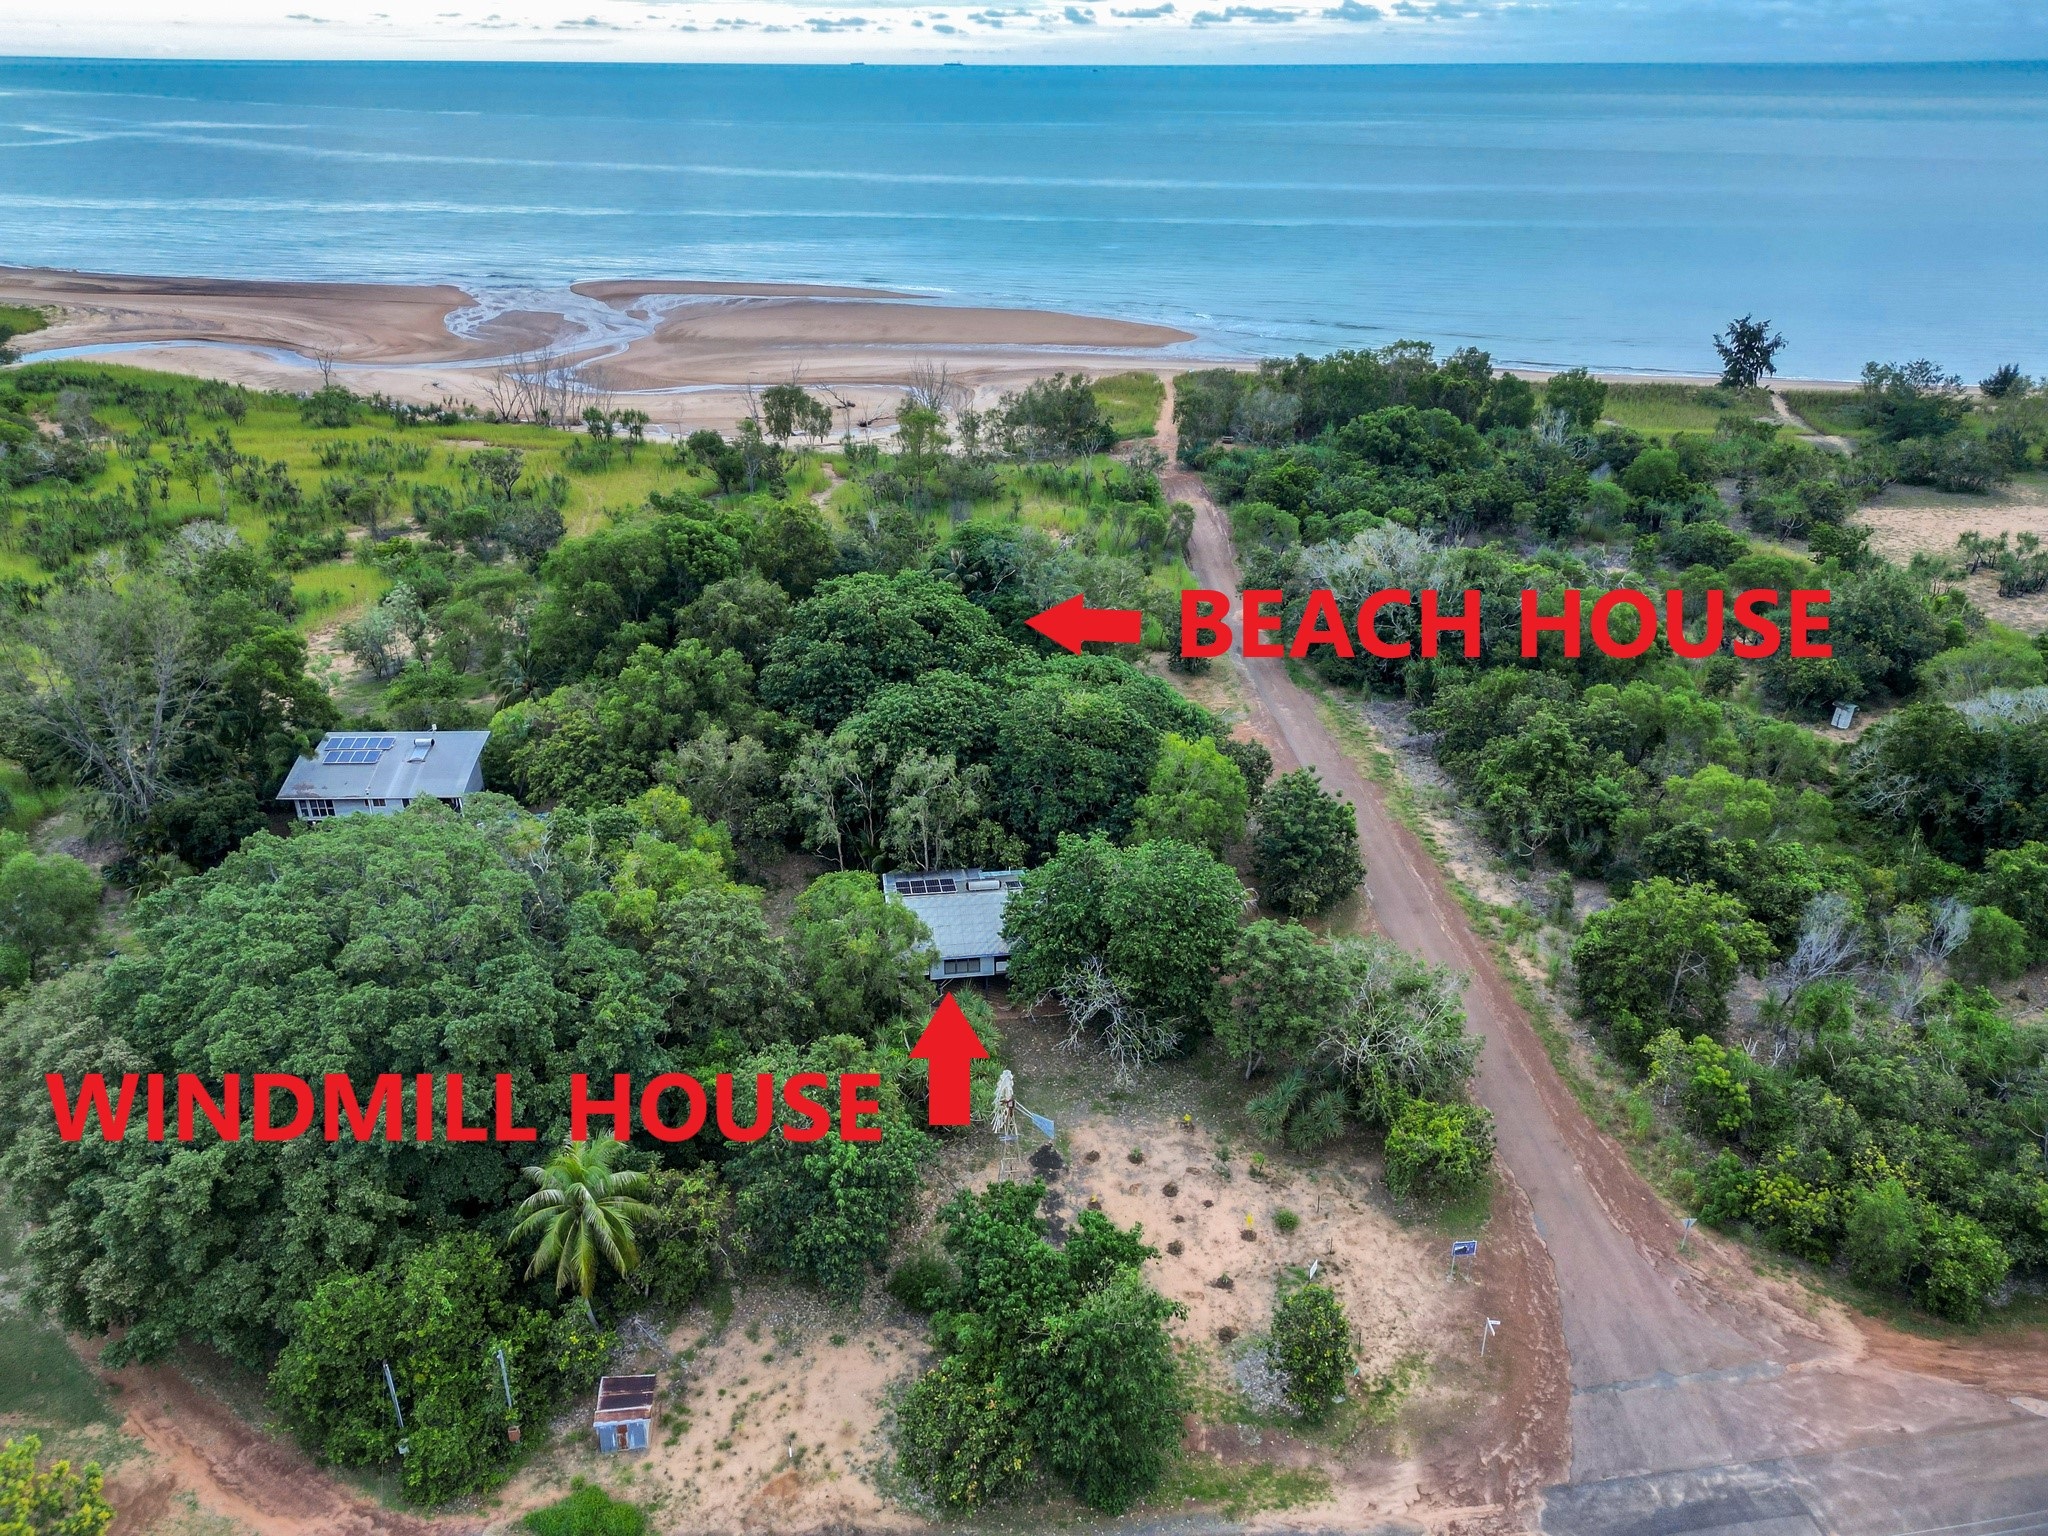 WBHH "Beach House" and "Windmill House" beachfront location.